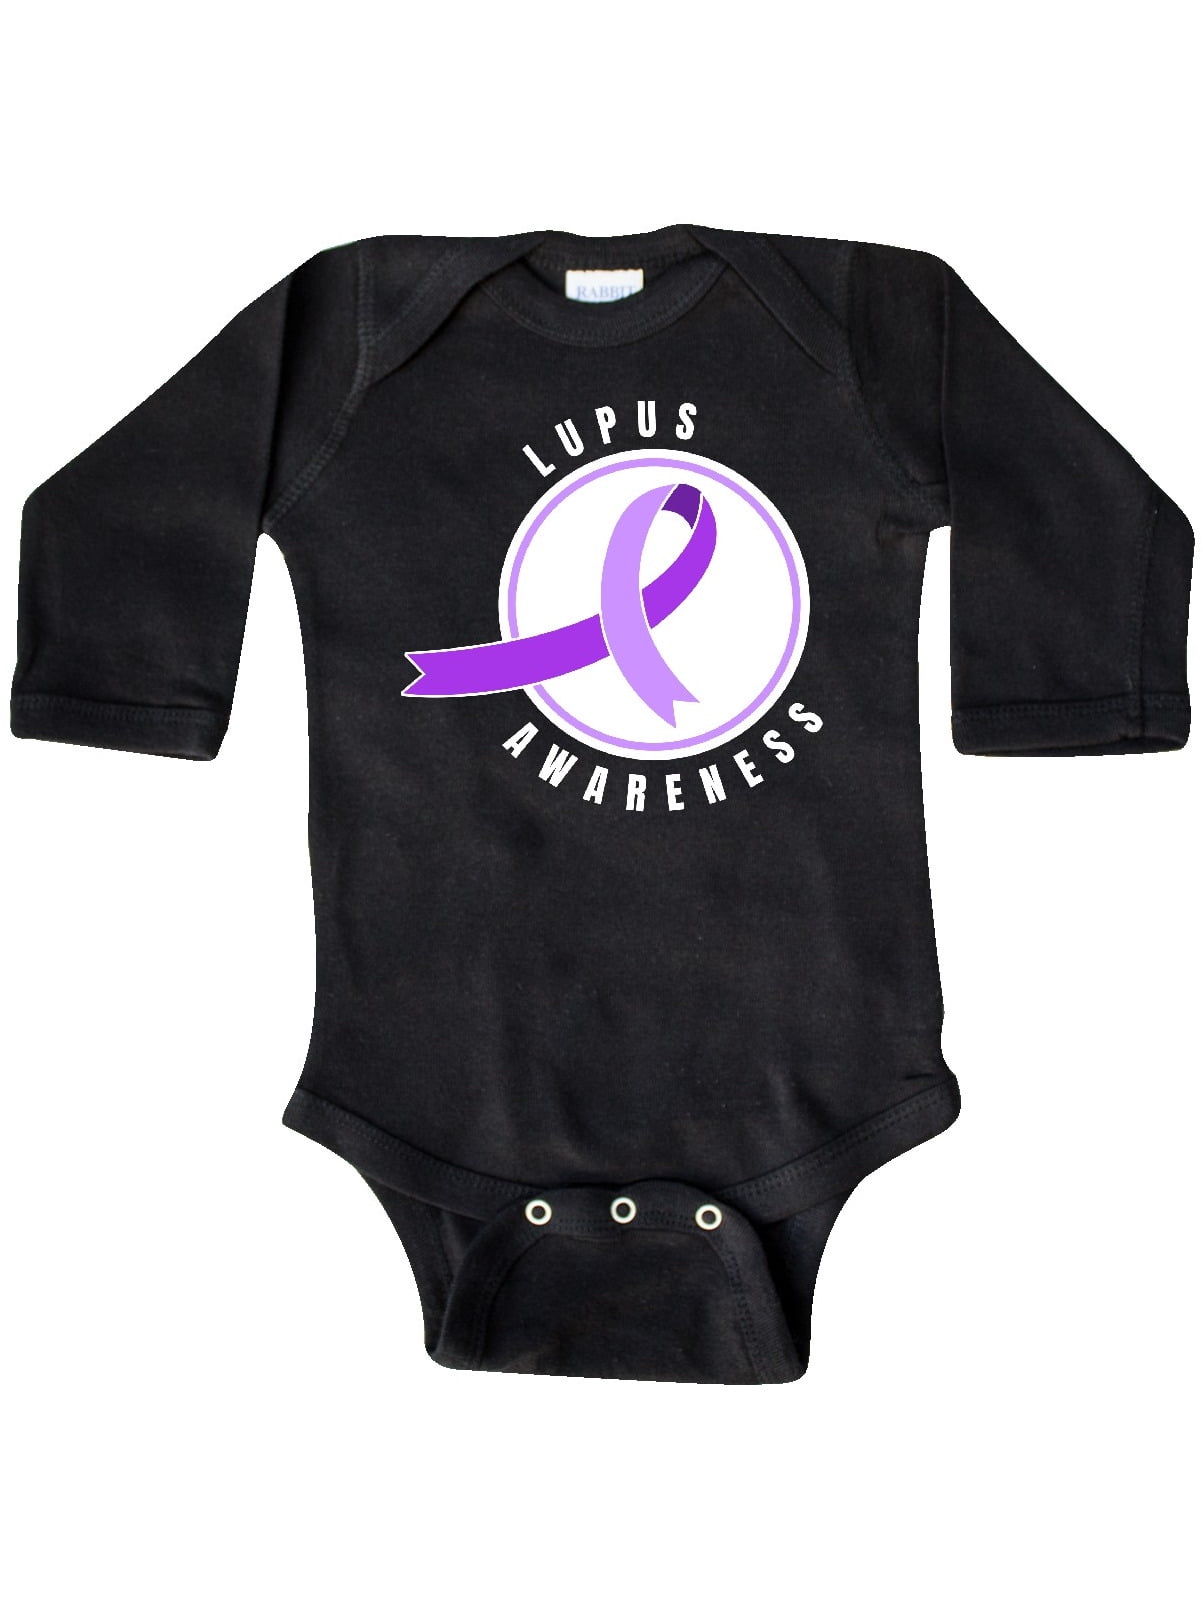 inktastic Lupus Awareness with Purple Ribbon Circle Baby T-Shirt